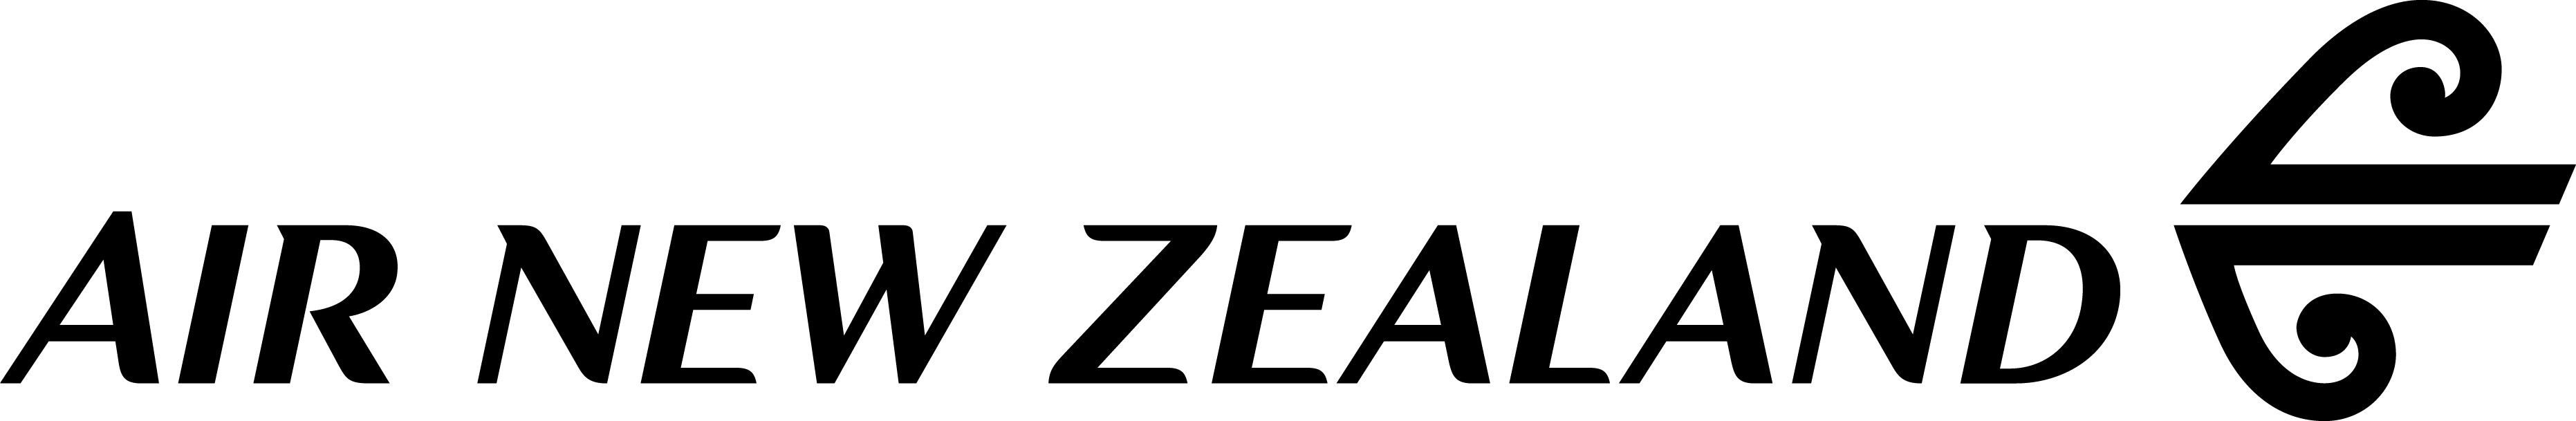 Resultado de imagen para air new zealand logo